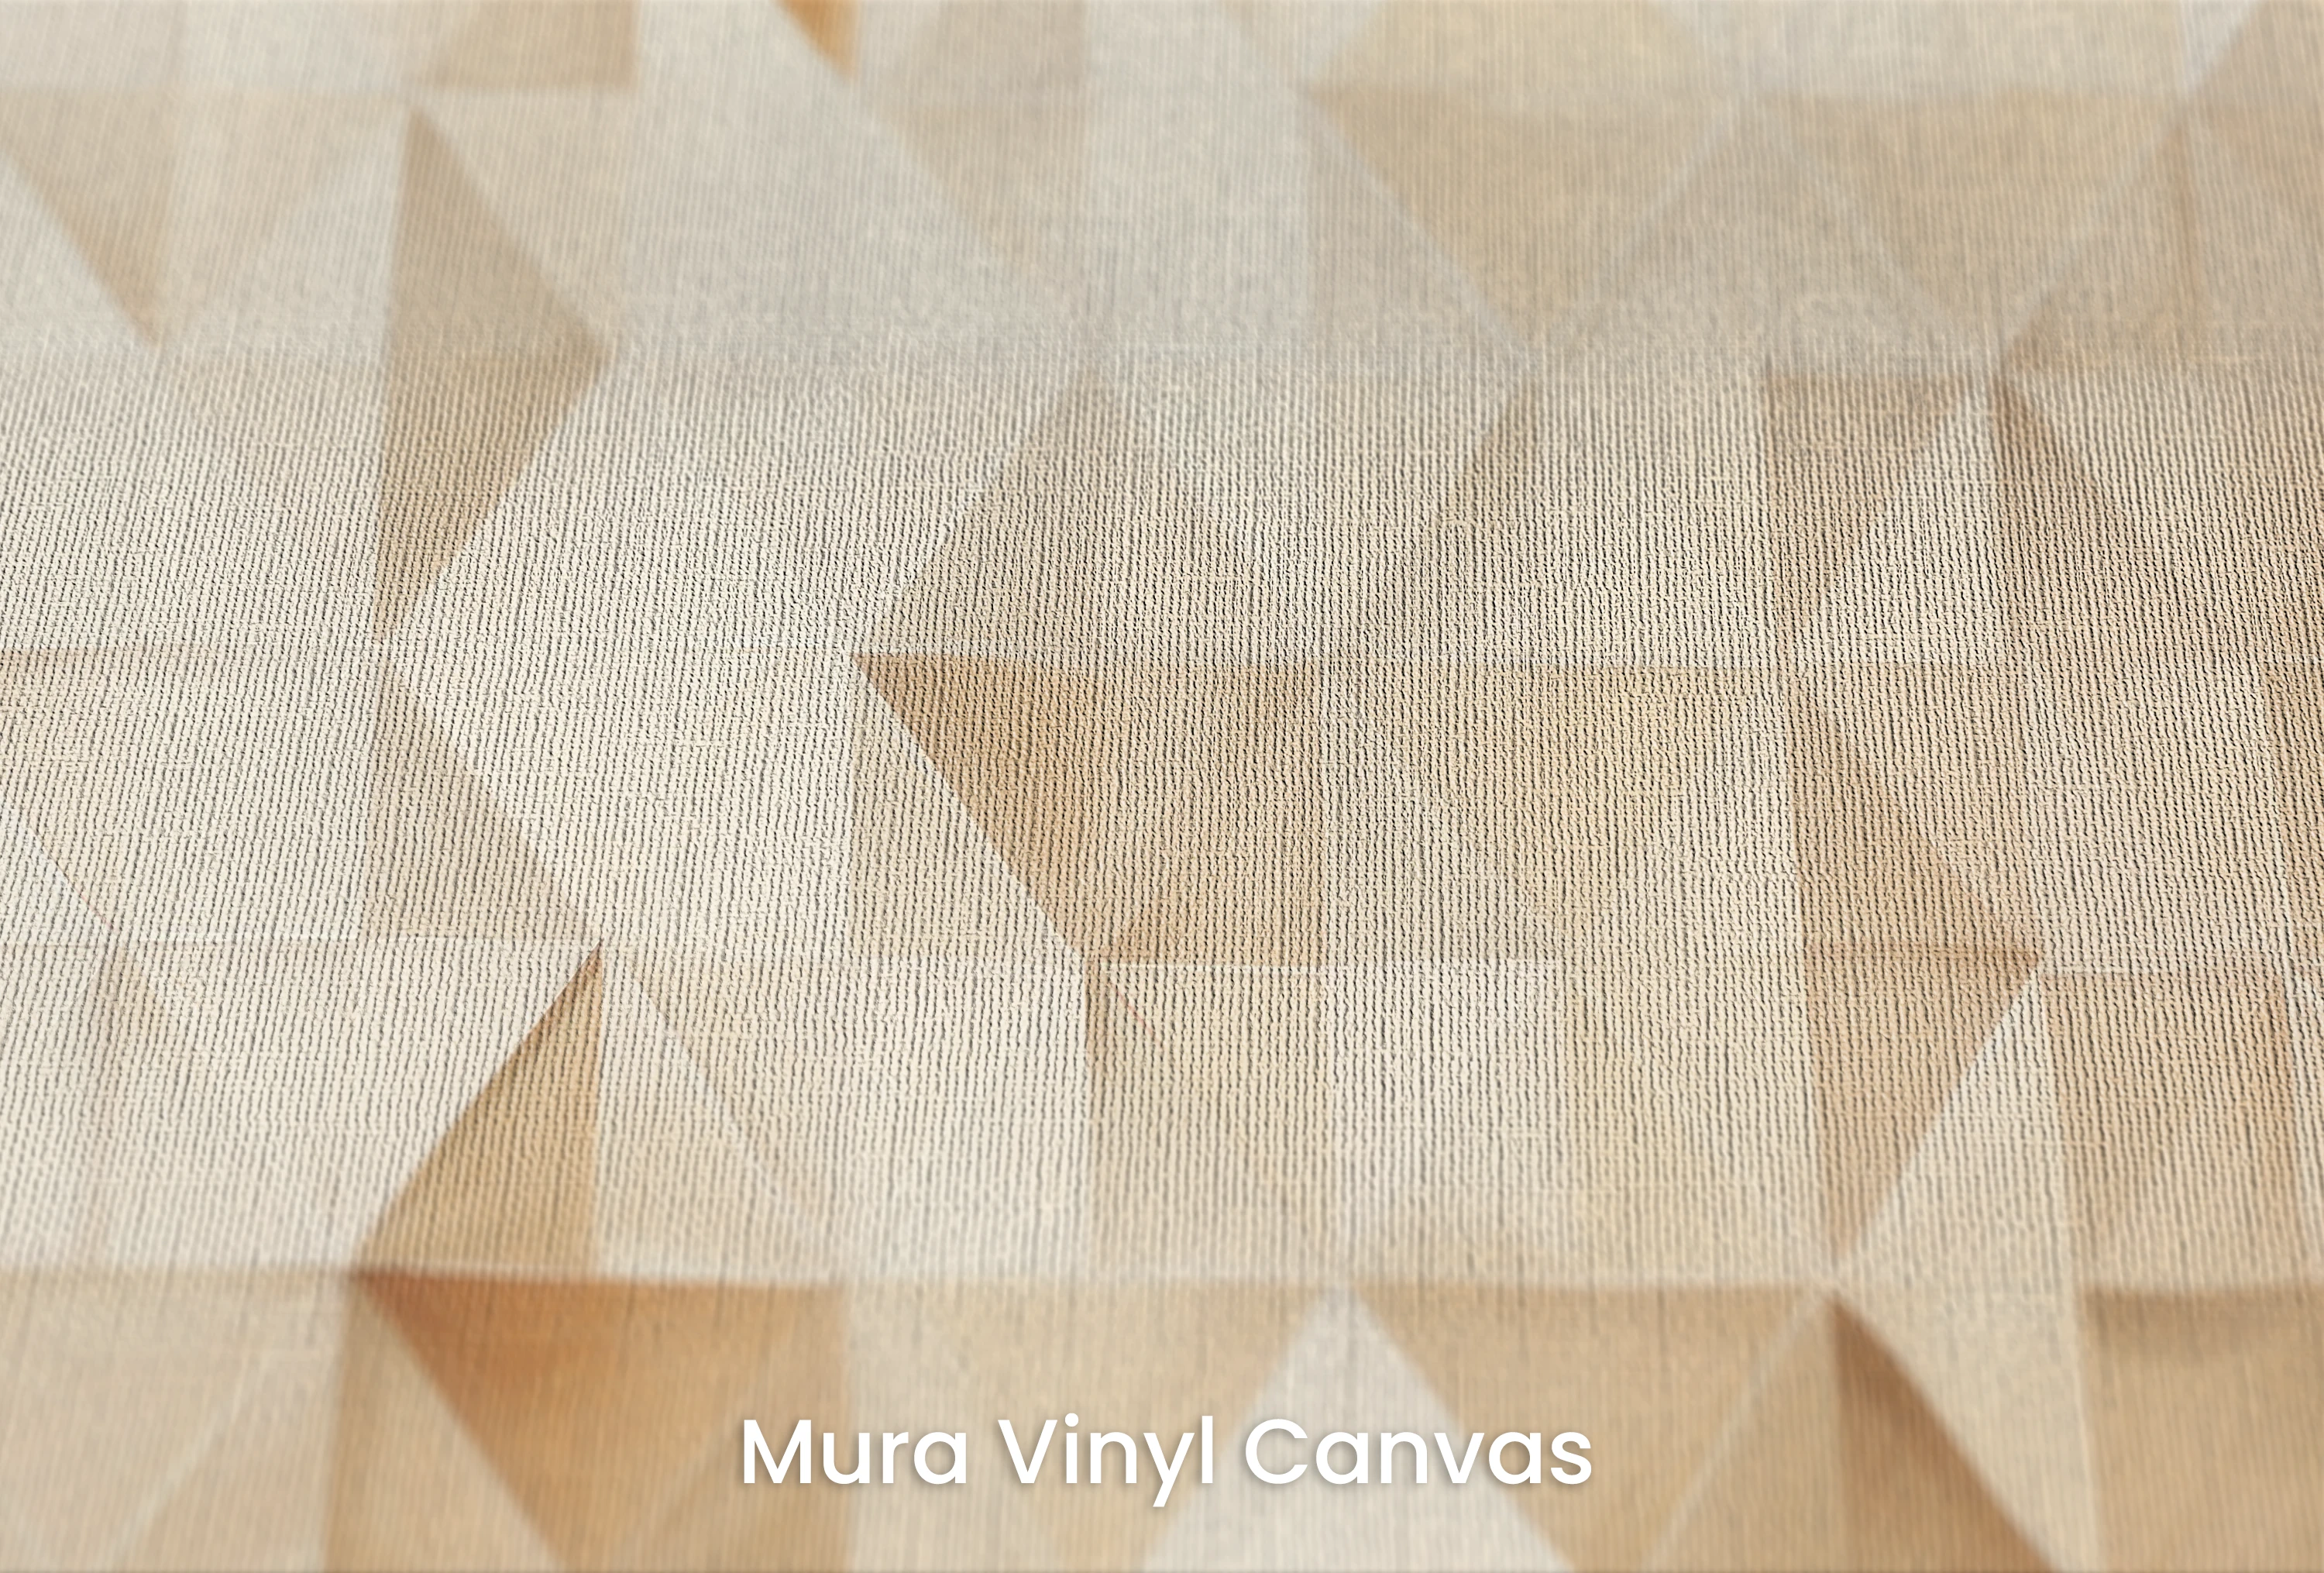 Mura Vinyl Canvas - Wallpaper with a natural canvas texture